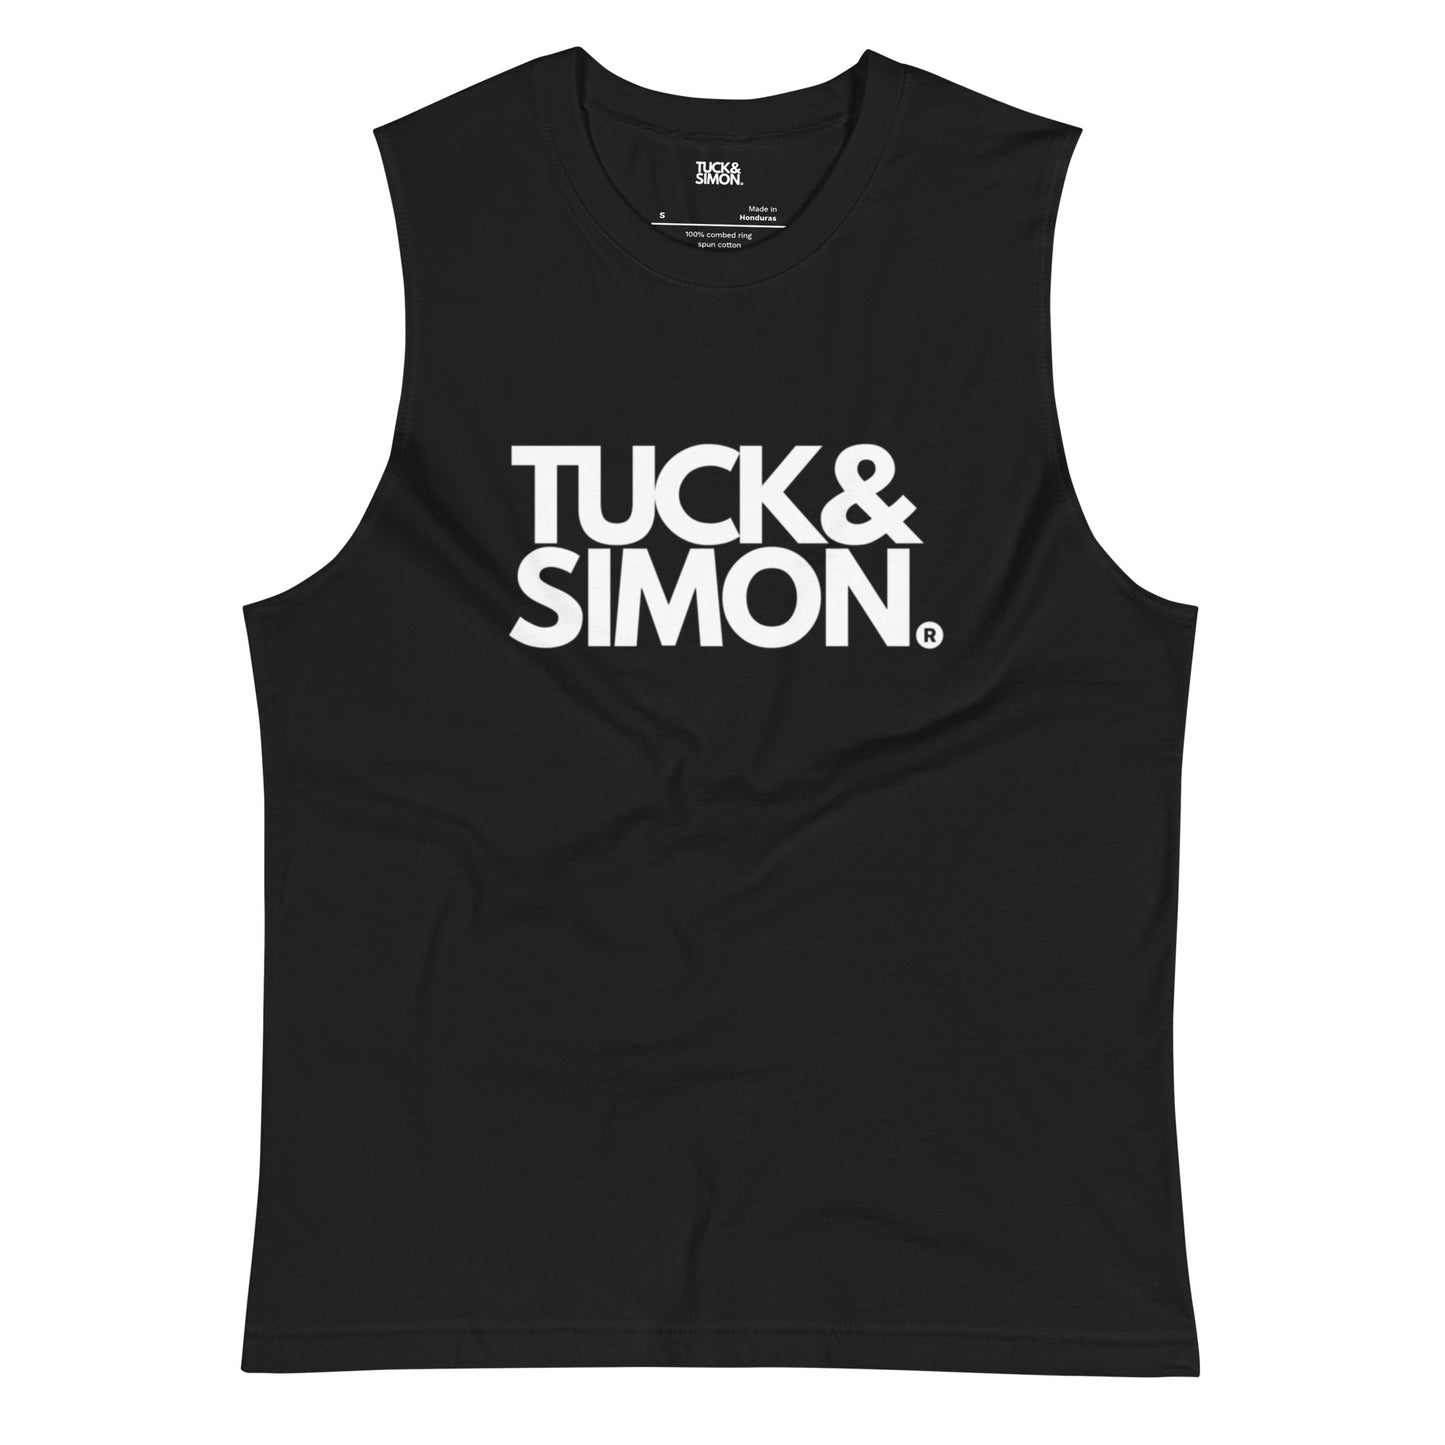 Tuck&Simon Black Muscle Shirt